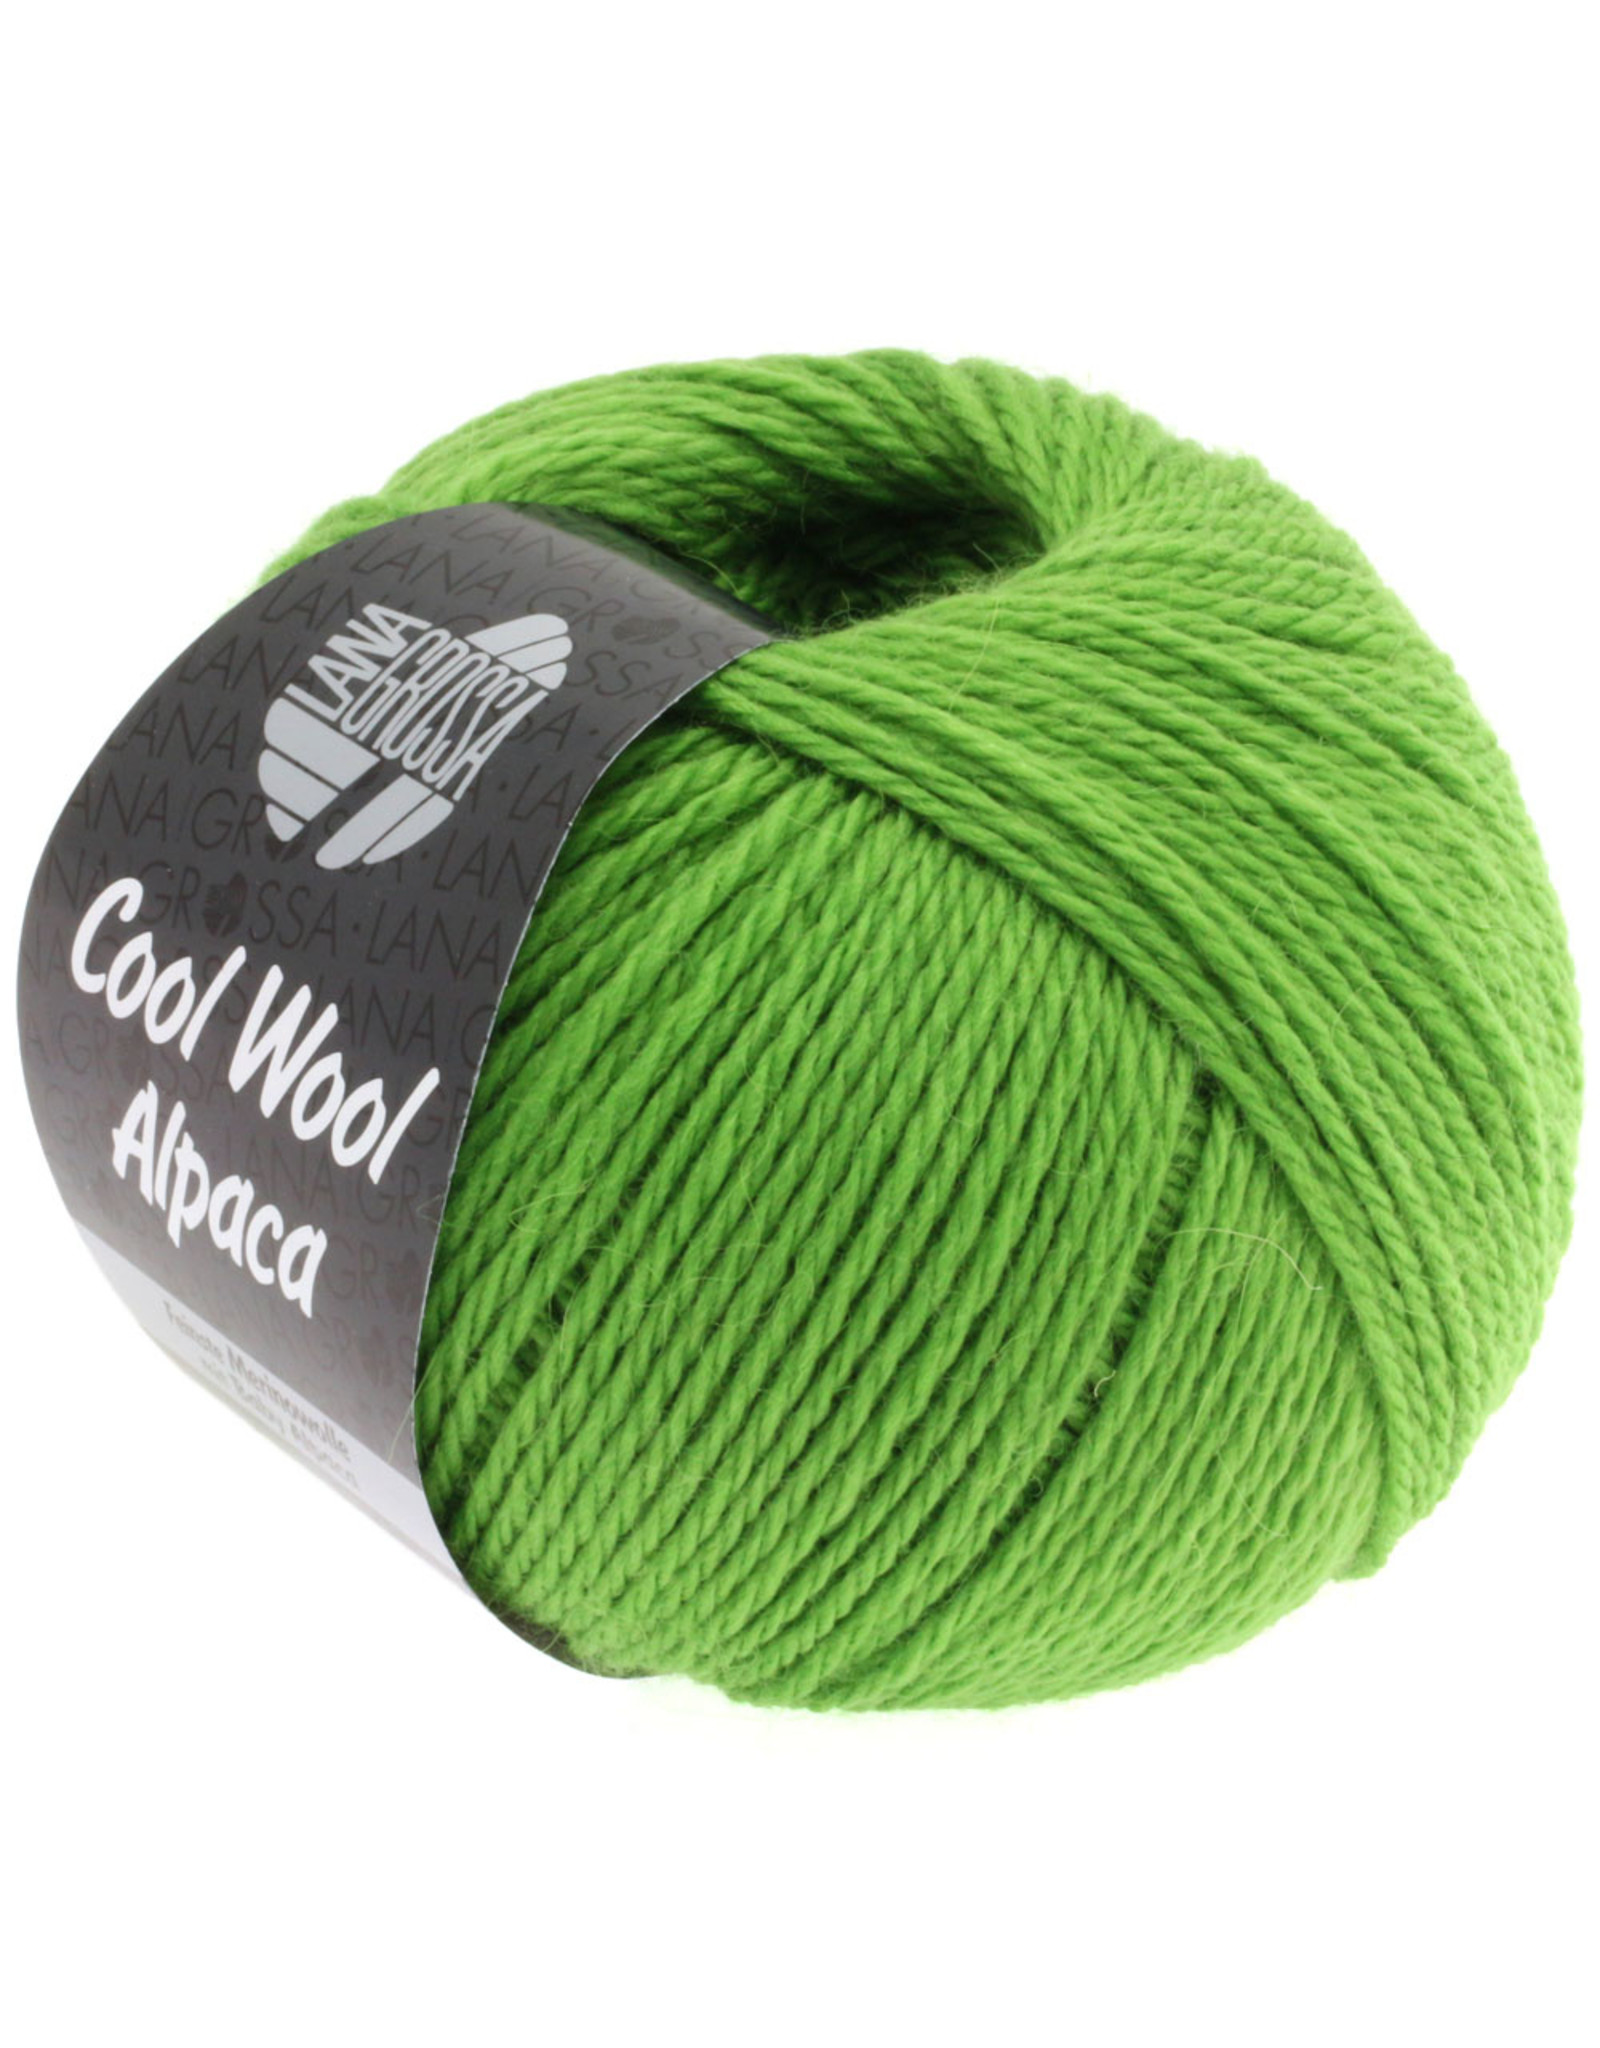 Lana Grossa Lana Grossa Cool wool alpaca 8